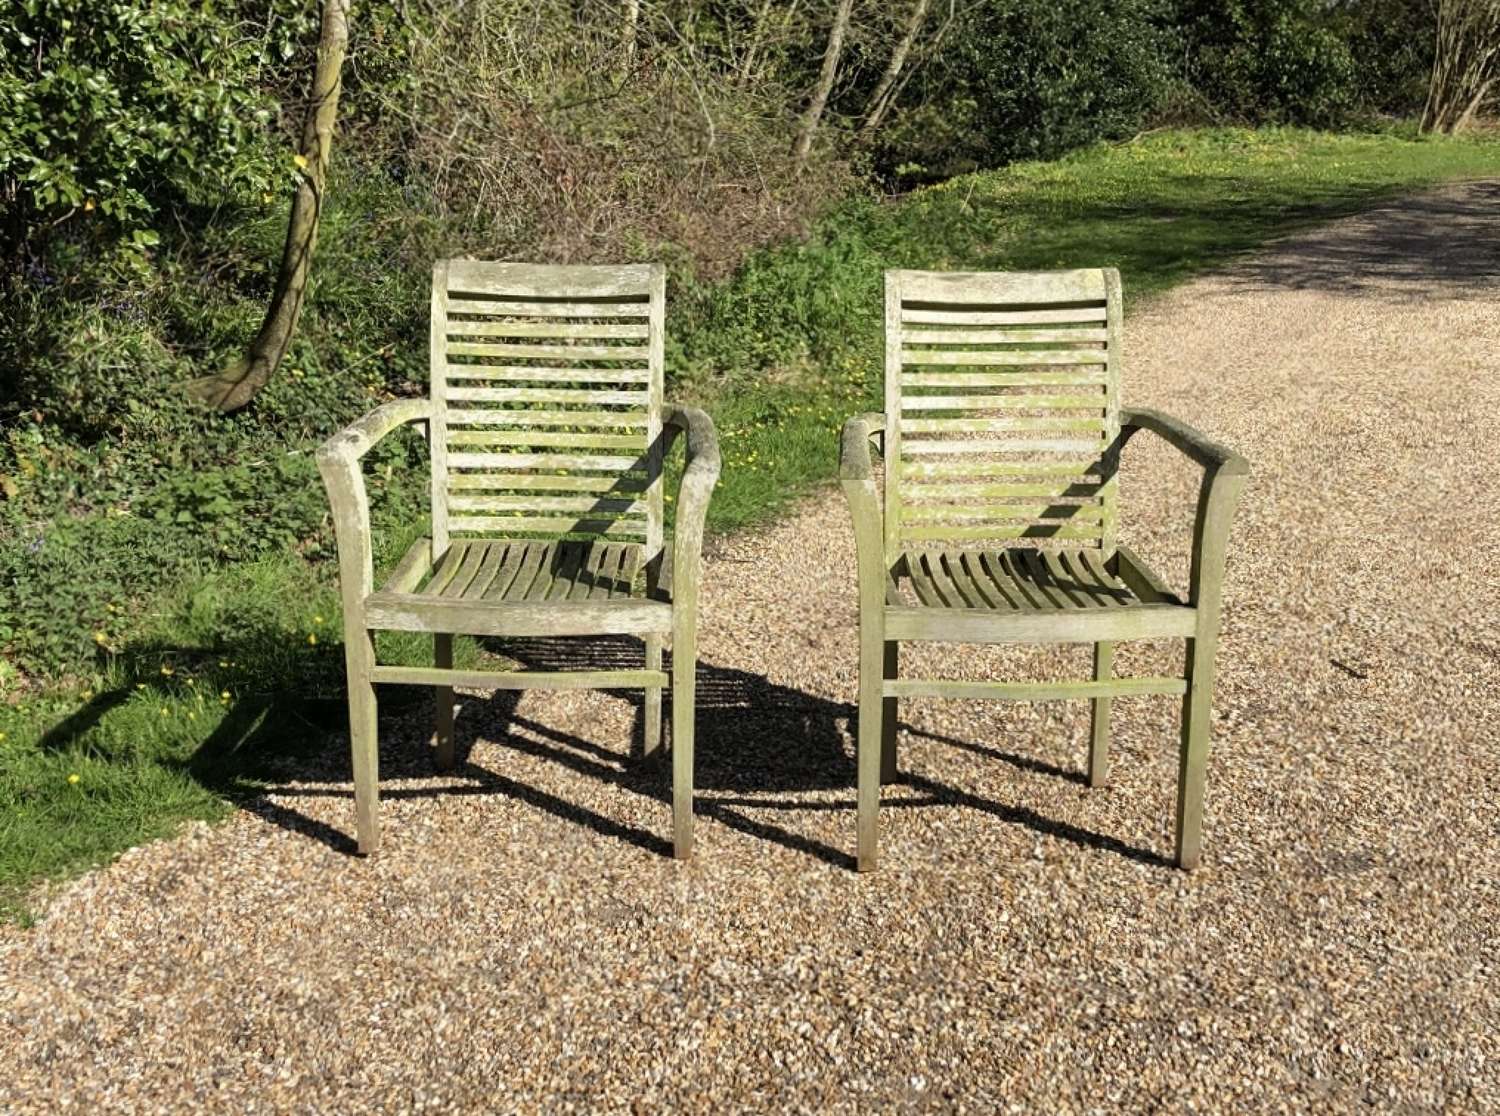 Pair of Garden Chairs